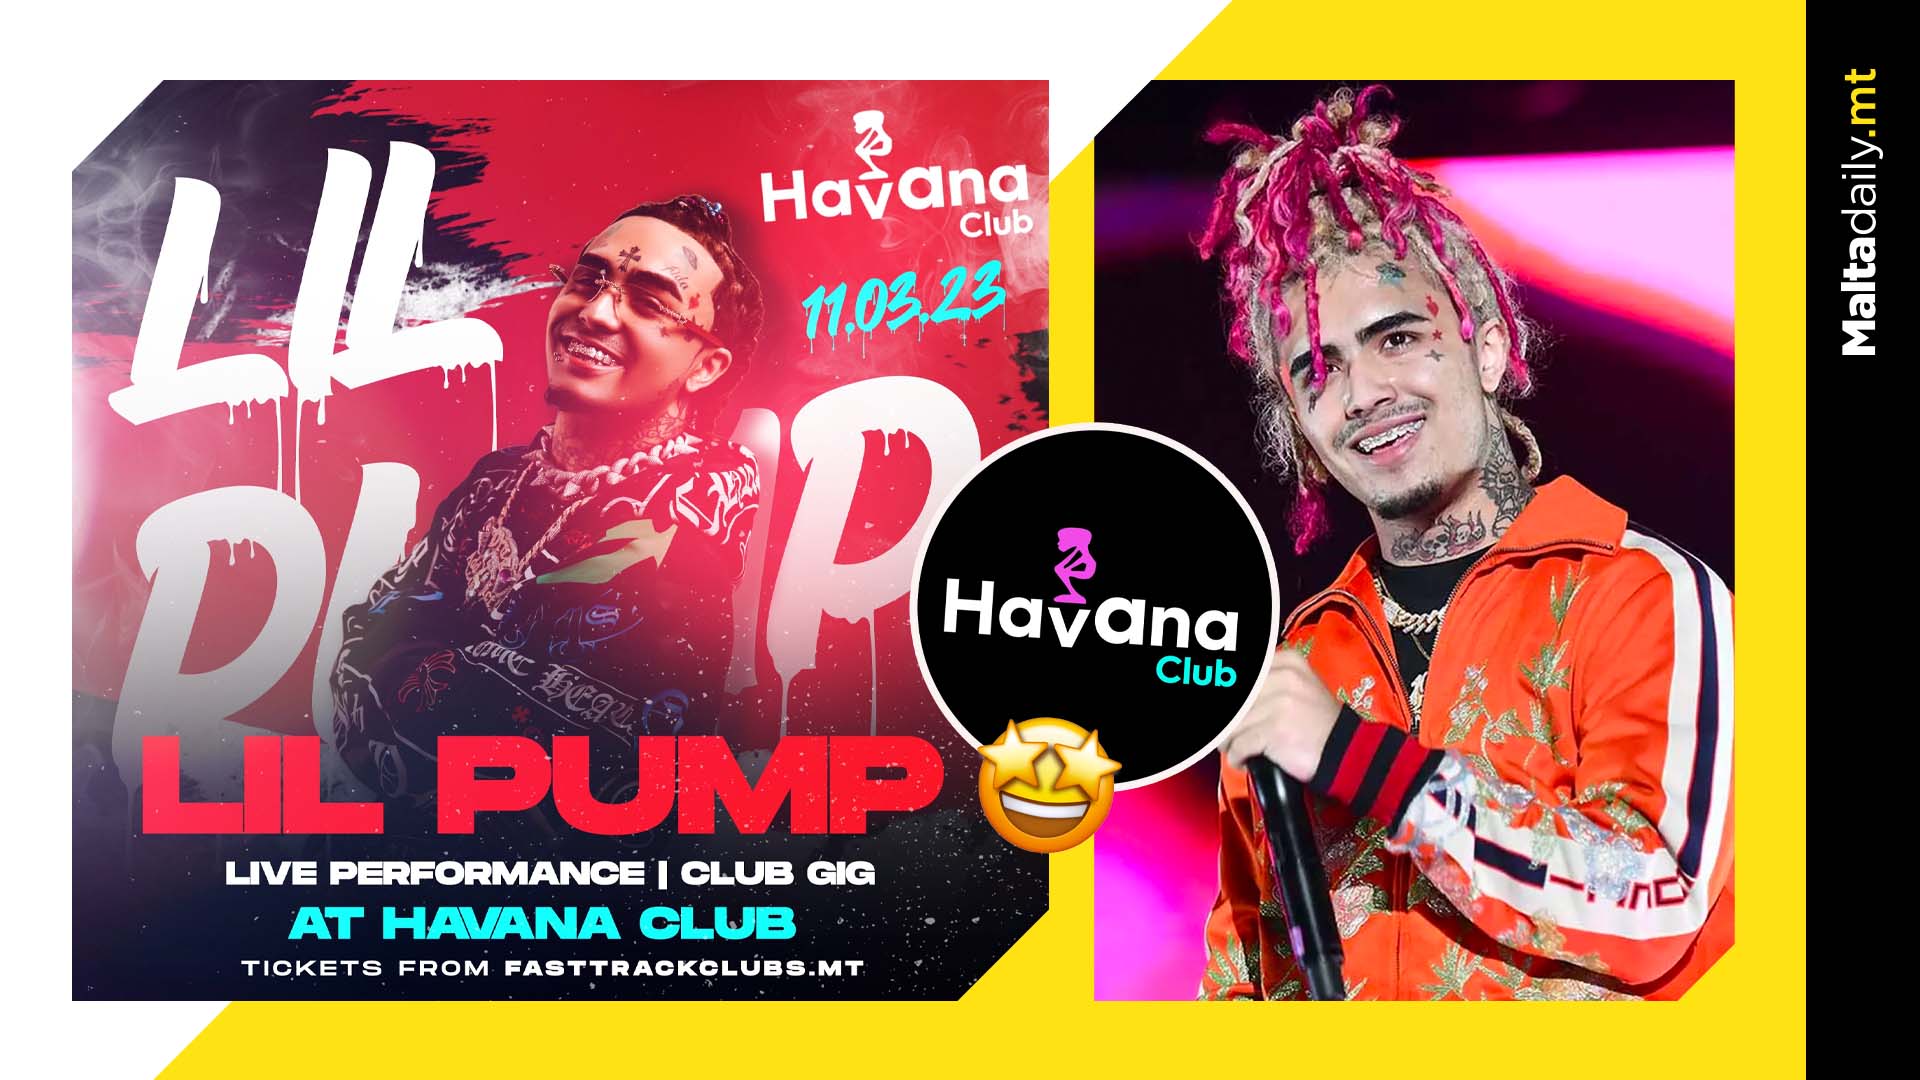 Rapper Lil Pump to perform live at Havana Club March 11th